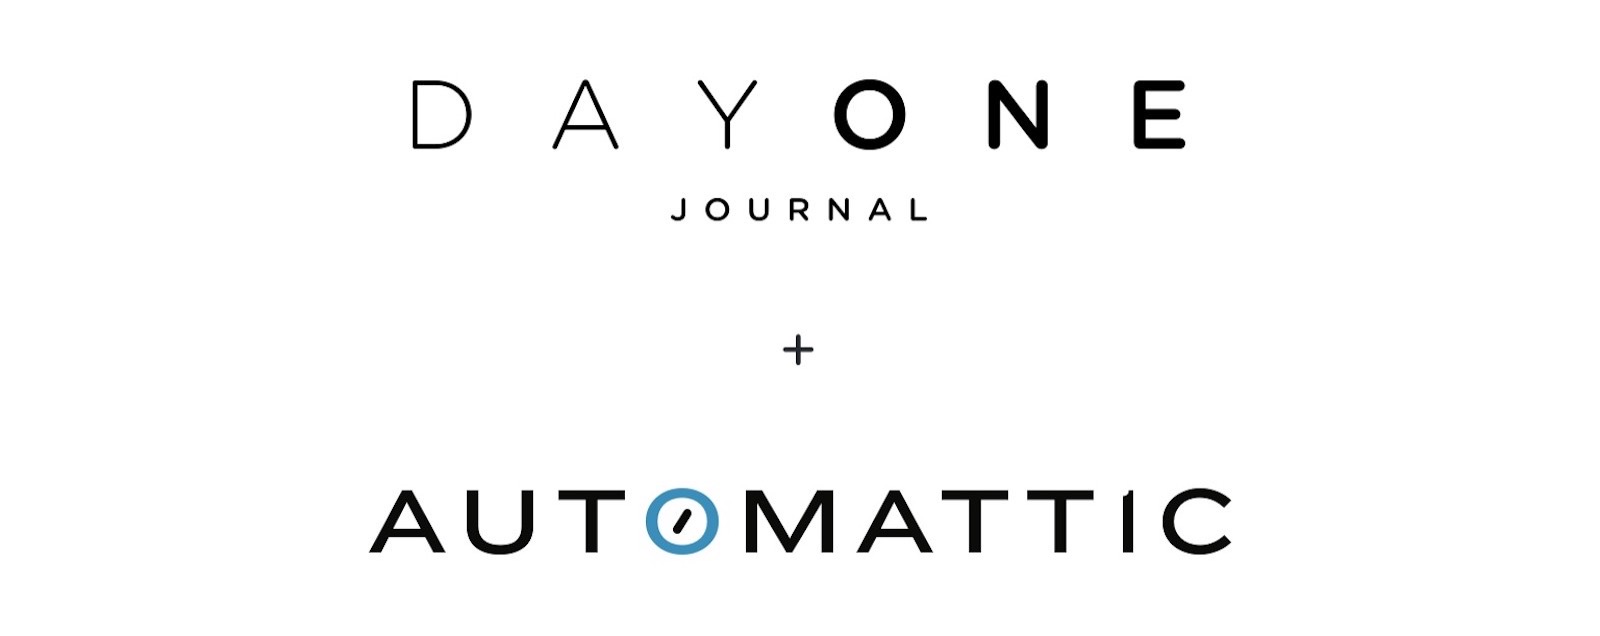 dayoneautomattic-logo.jpg